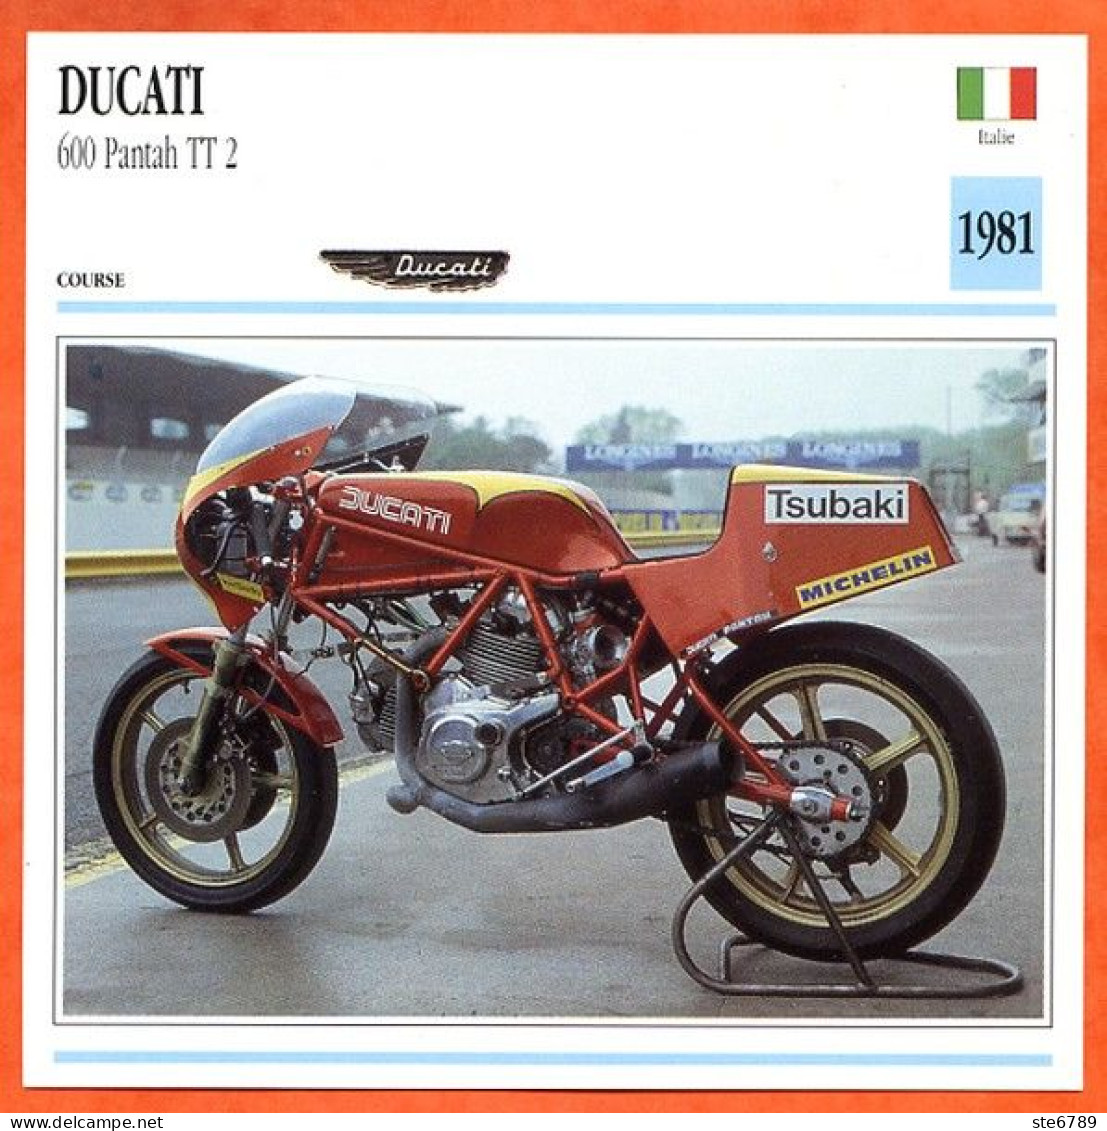 DUCATI 600 Pantah TT2 1981 Italie Fiche Technique Moto - Sports